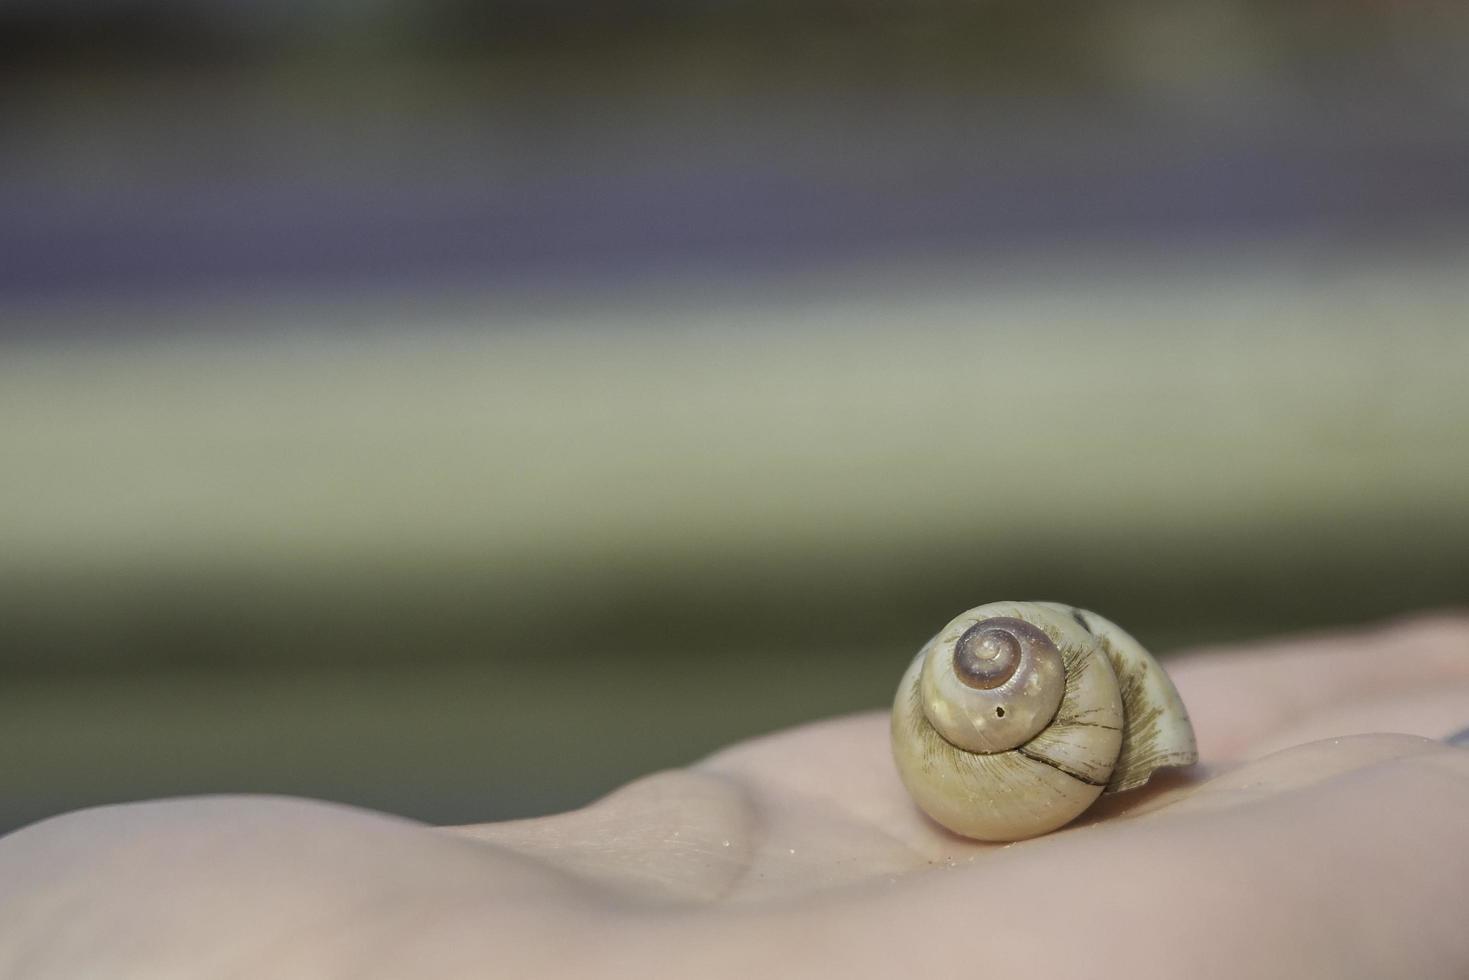 A snail shell on a hand photo